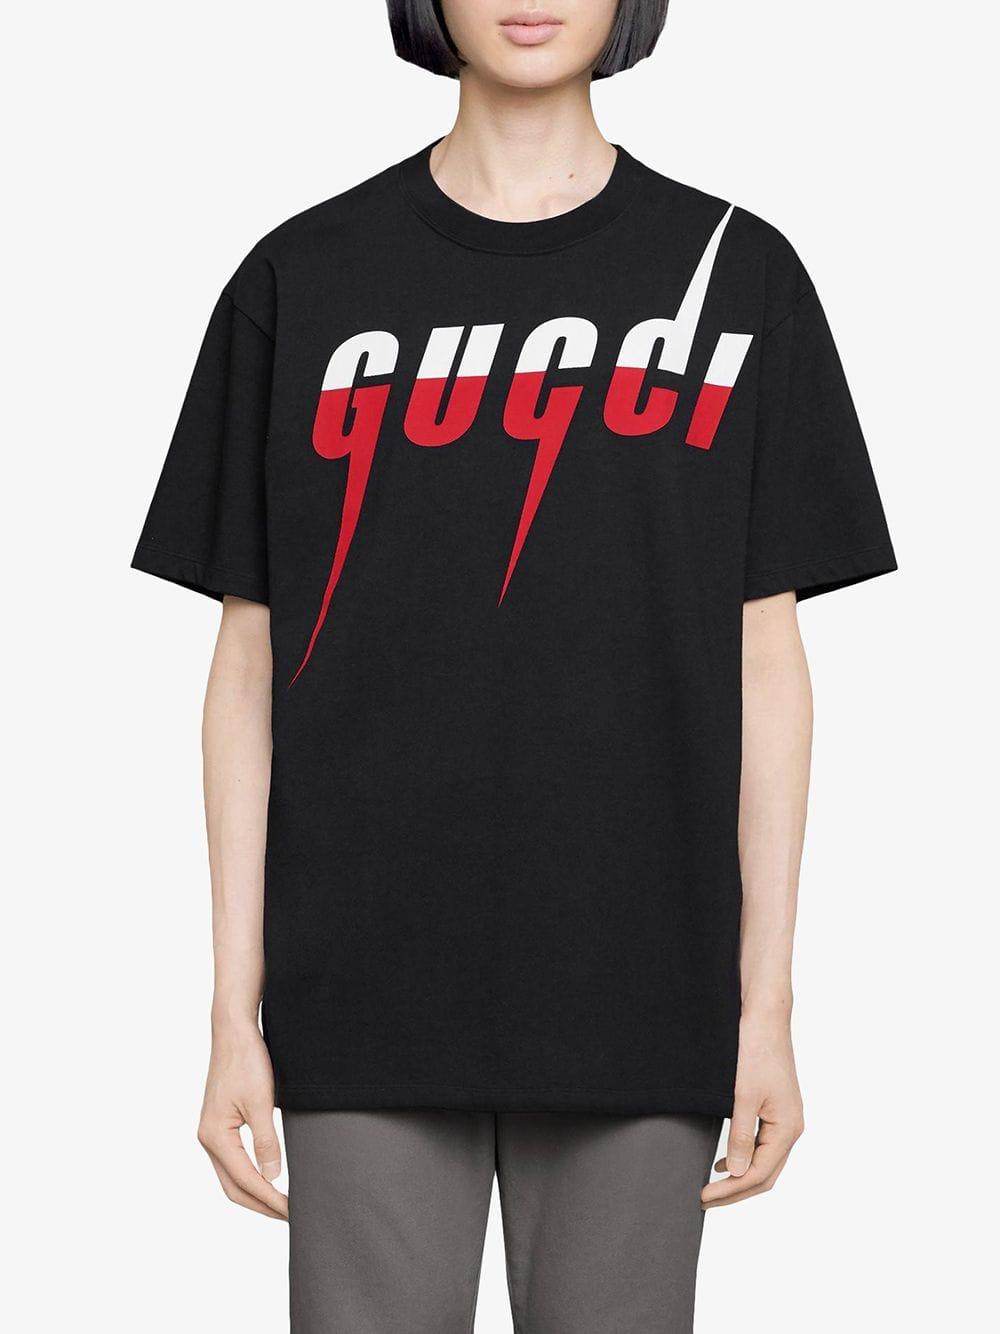 Gucci Black Logo Tshirt for Men Save 34 Lyst